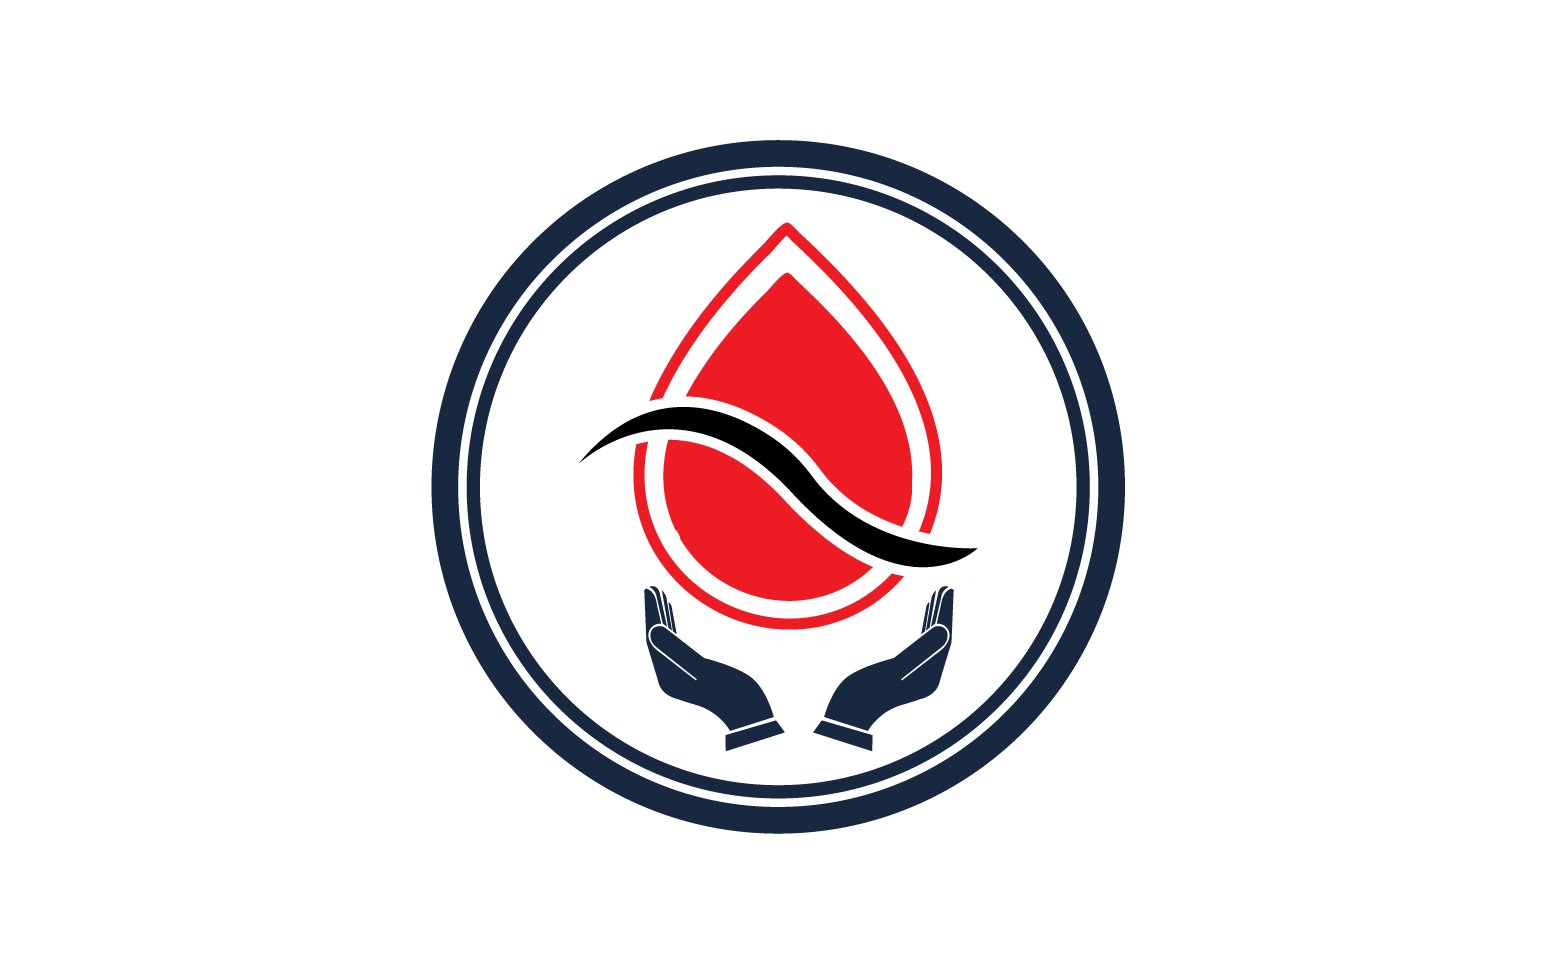 Blood drop icon logo template version v37